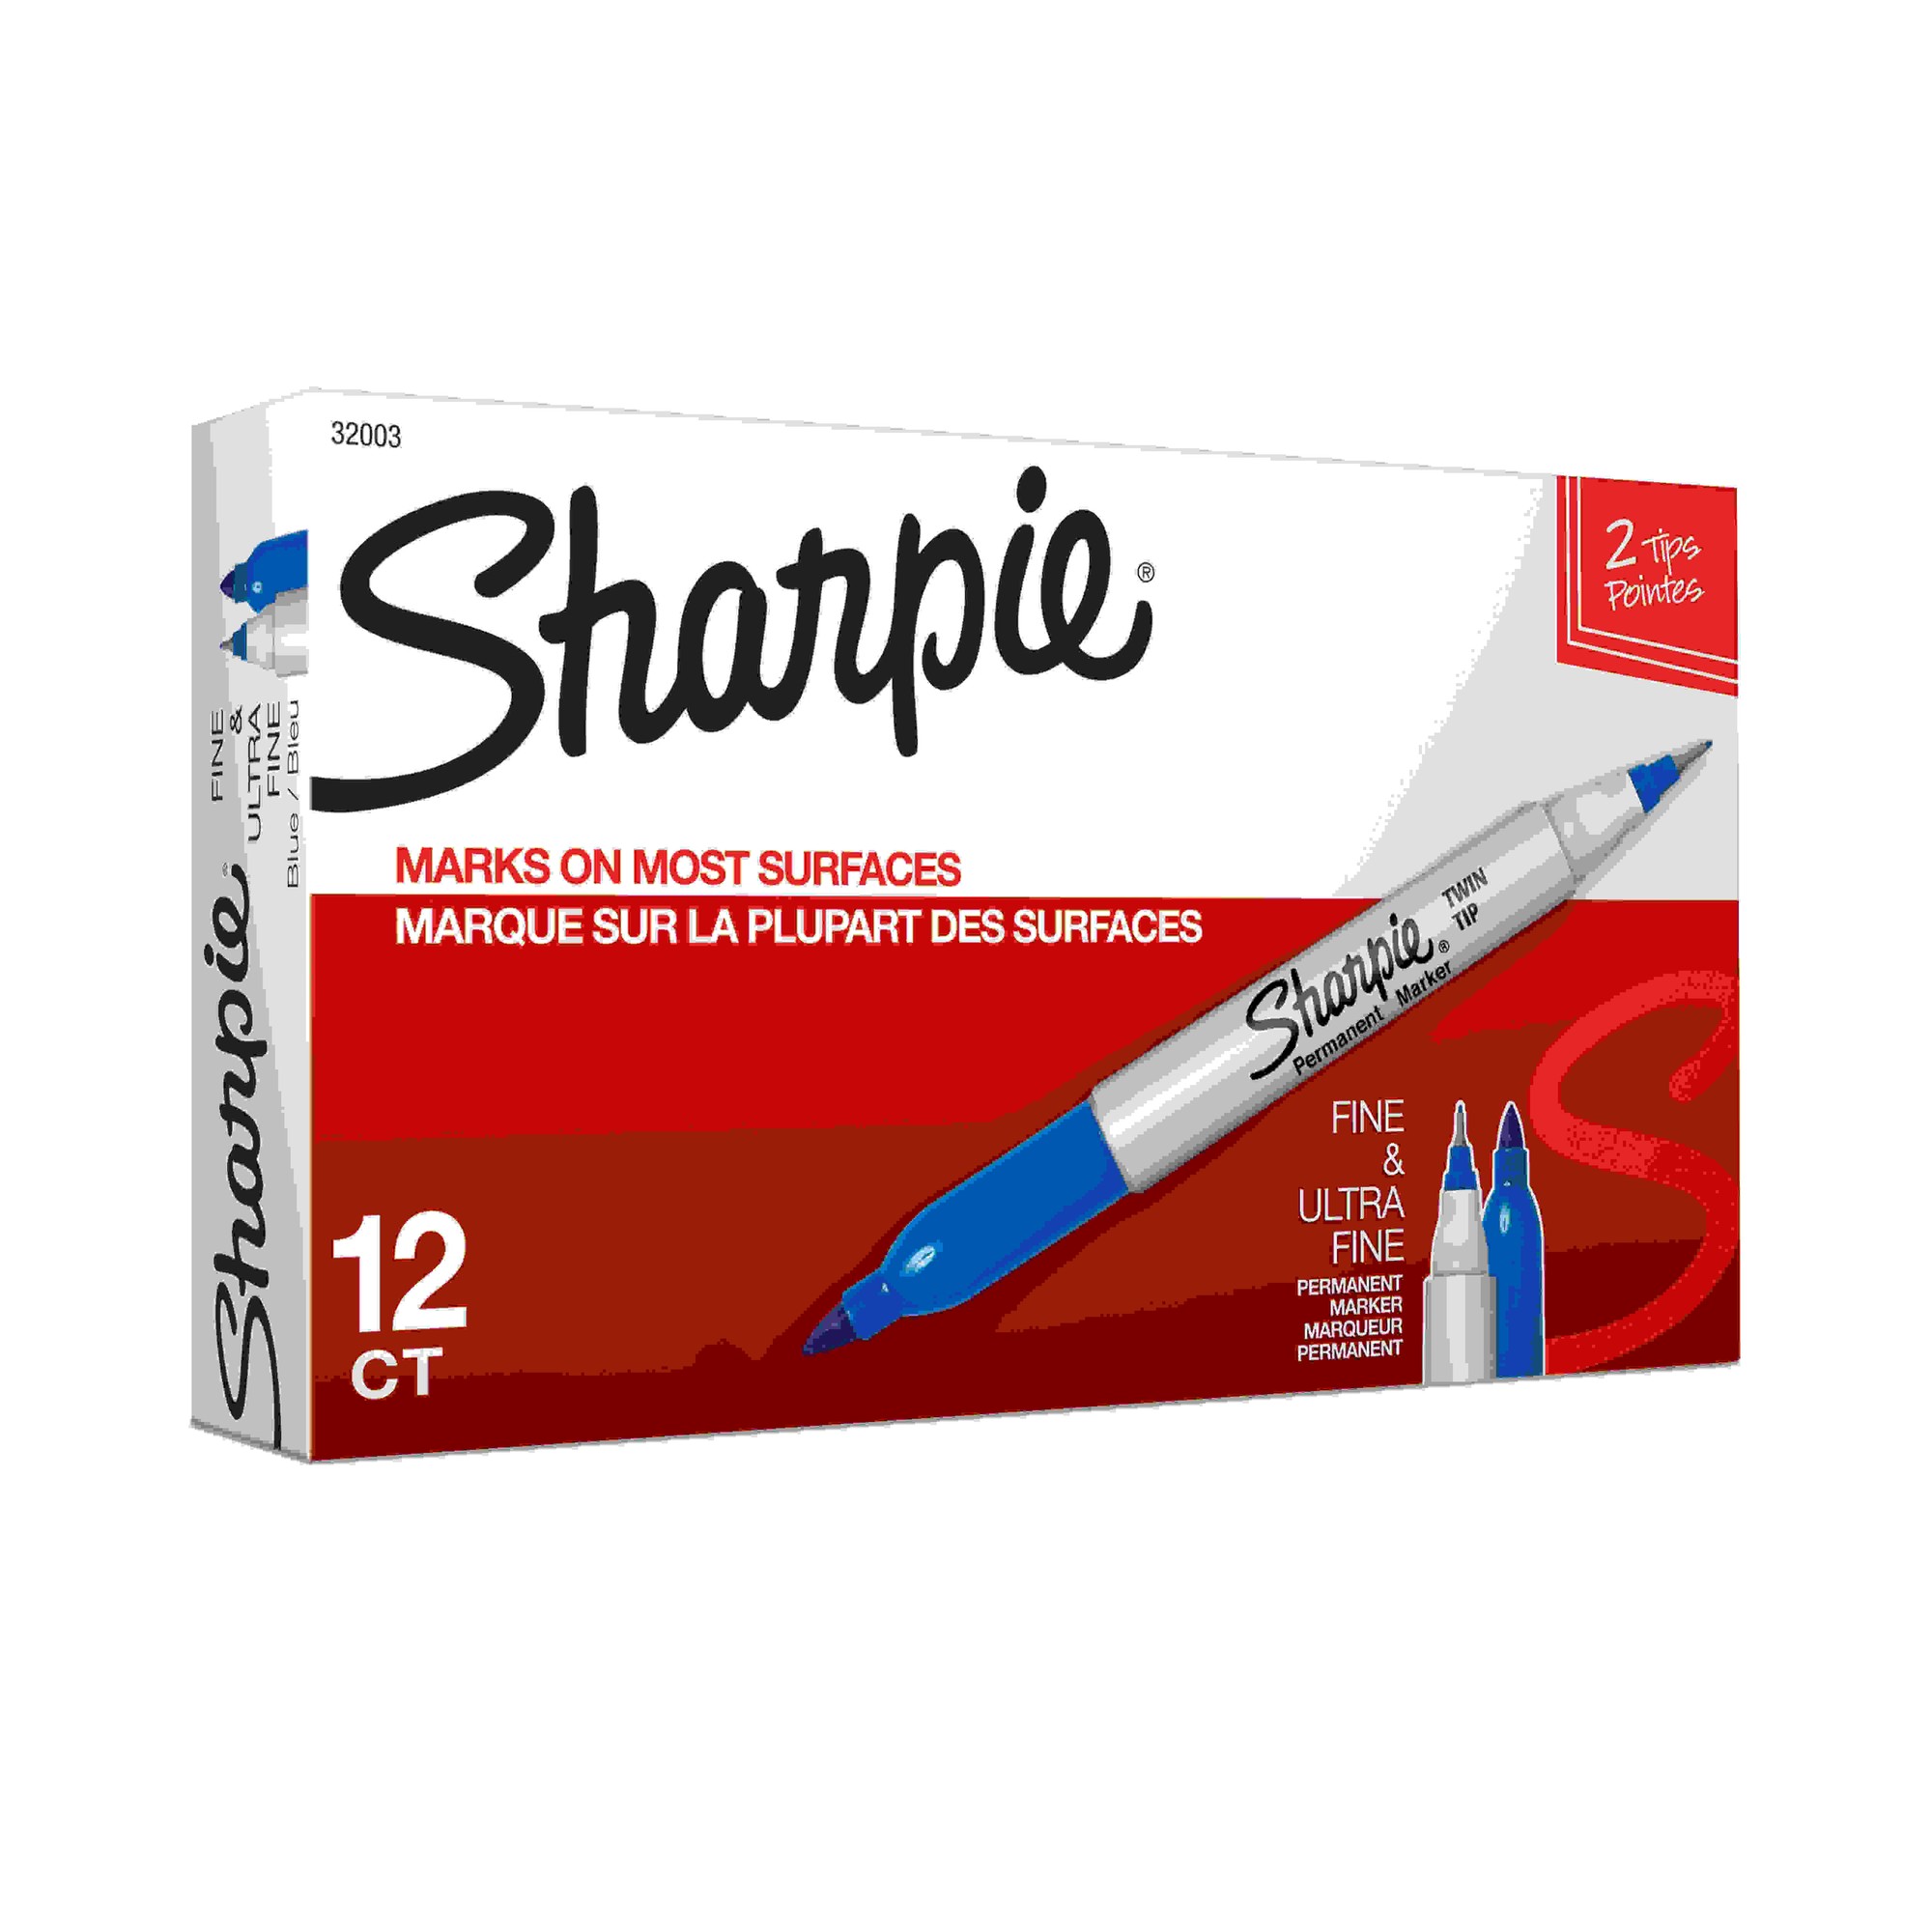 Sharpie Twin Tip Permanent Marker - Fine, Ultra Fine Marker Point - Blue Alcohol Based Ink - 1 Each